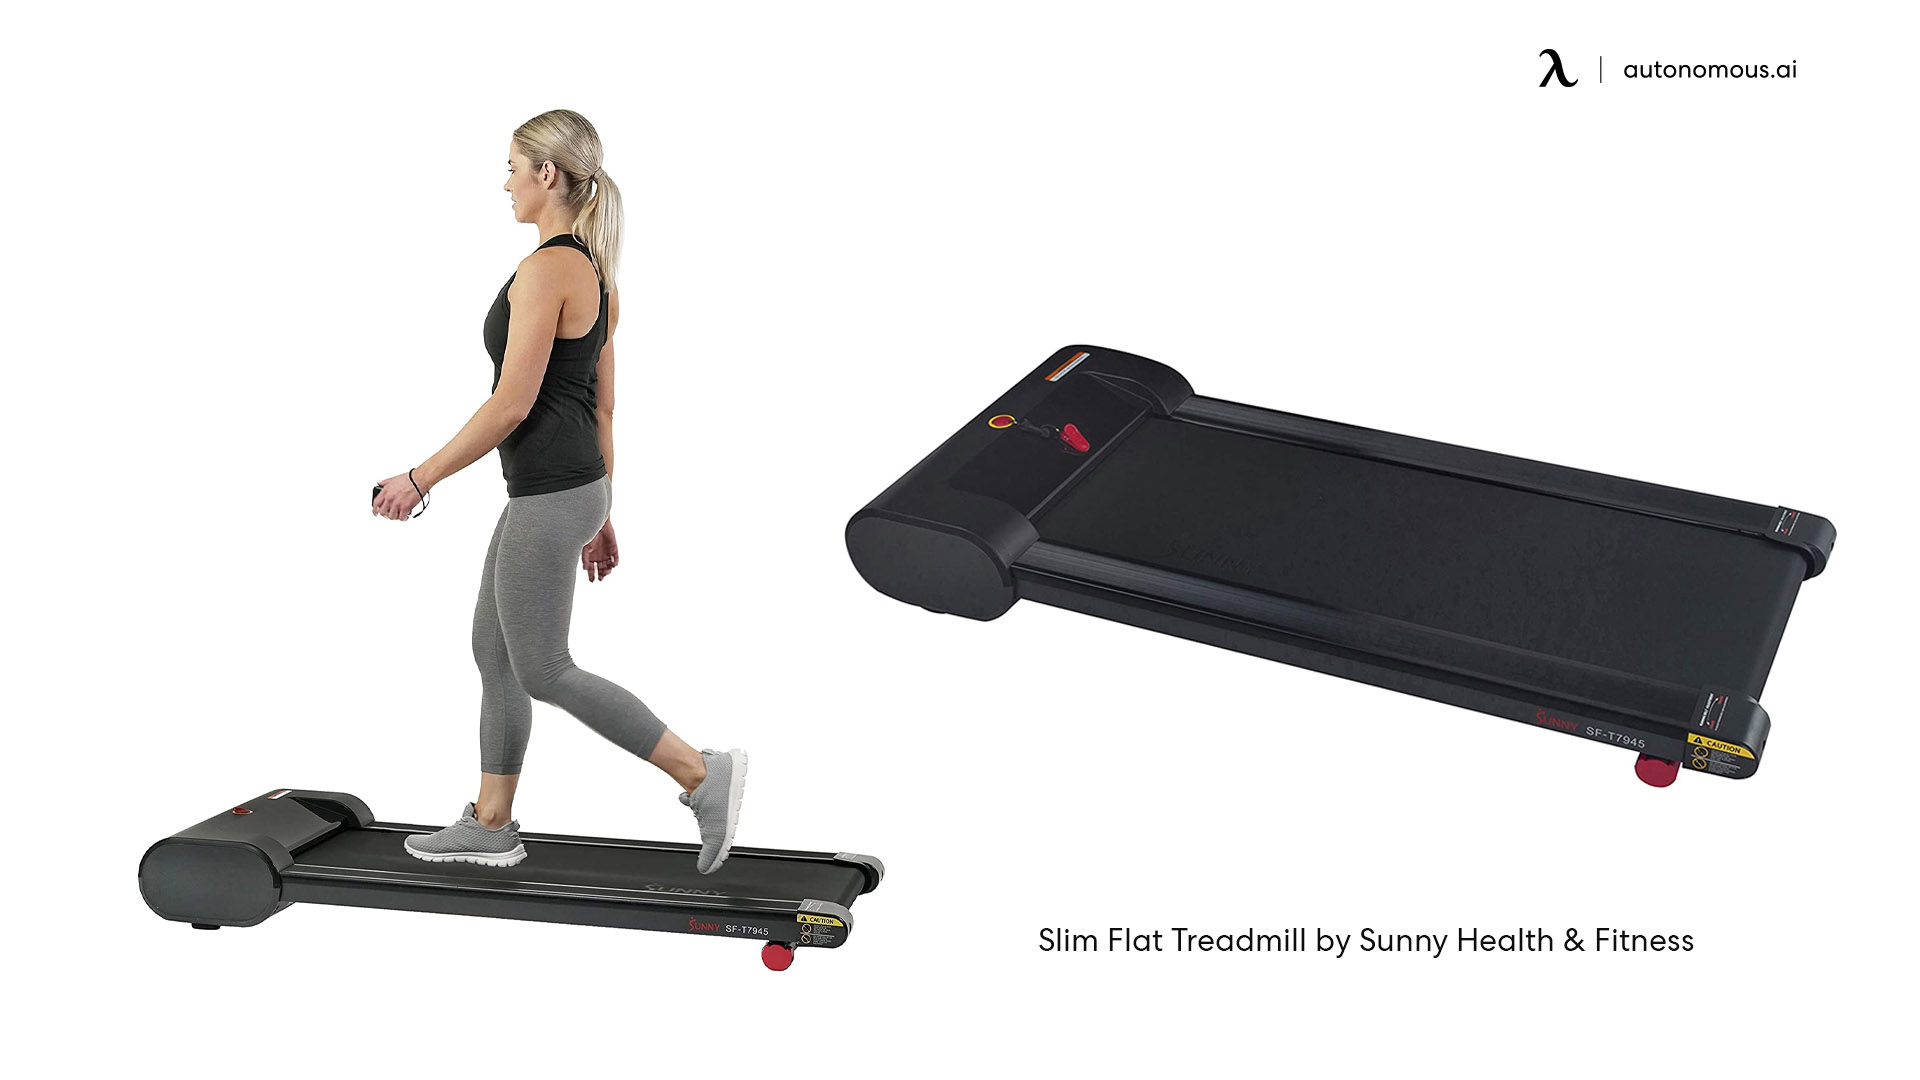 Slim Flat under desk treadmill by Sunny Health & Fitness